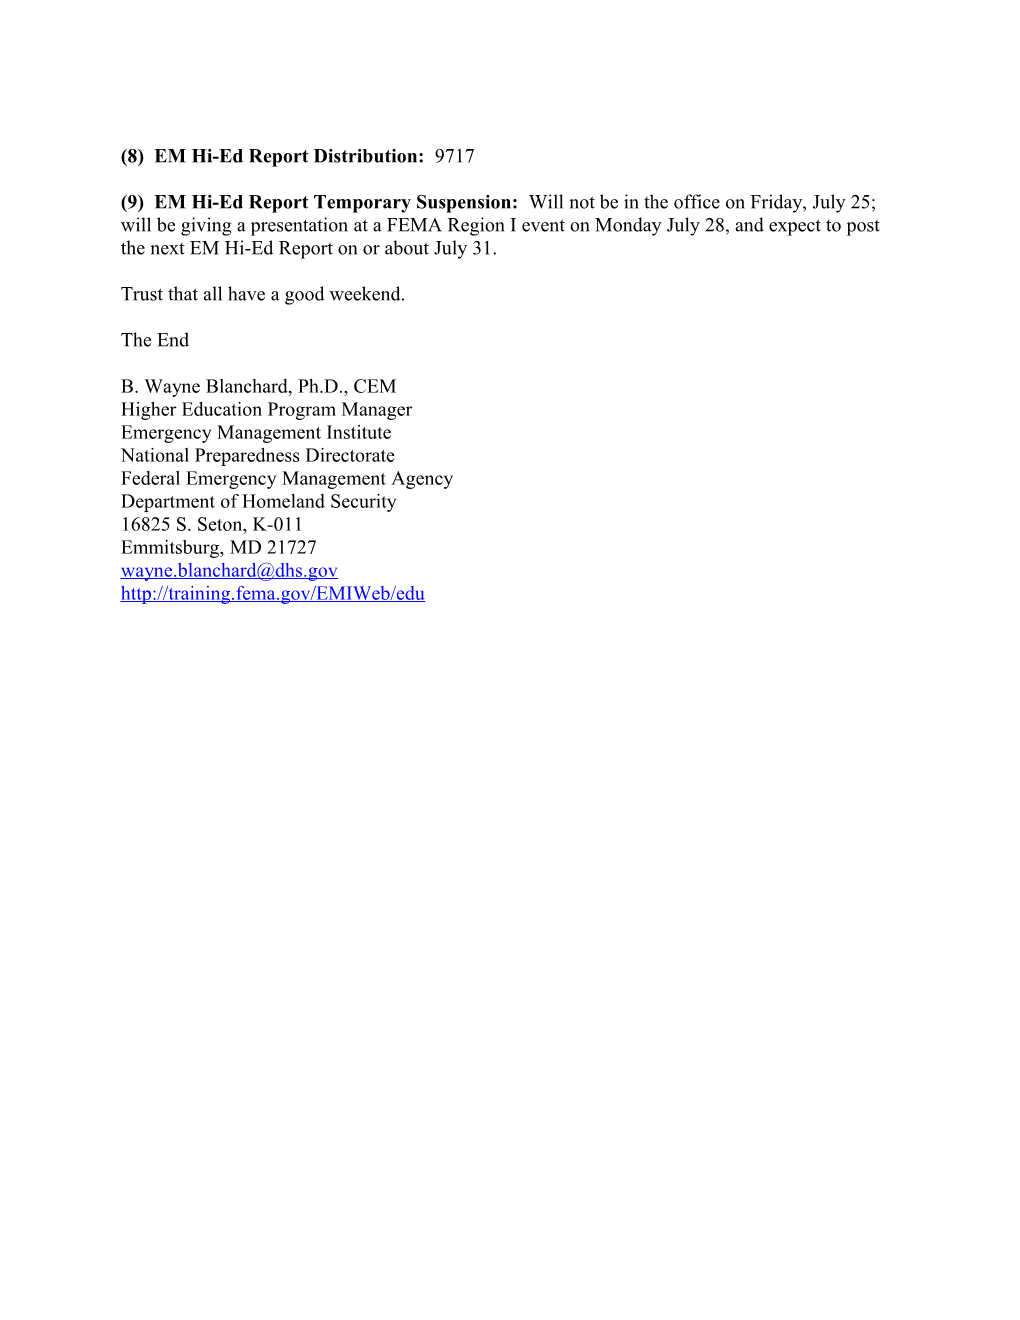 June 30, 2008 FEMA/EMI Emergency Management Higher Educations Program Report